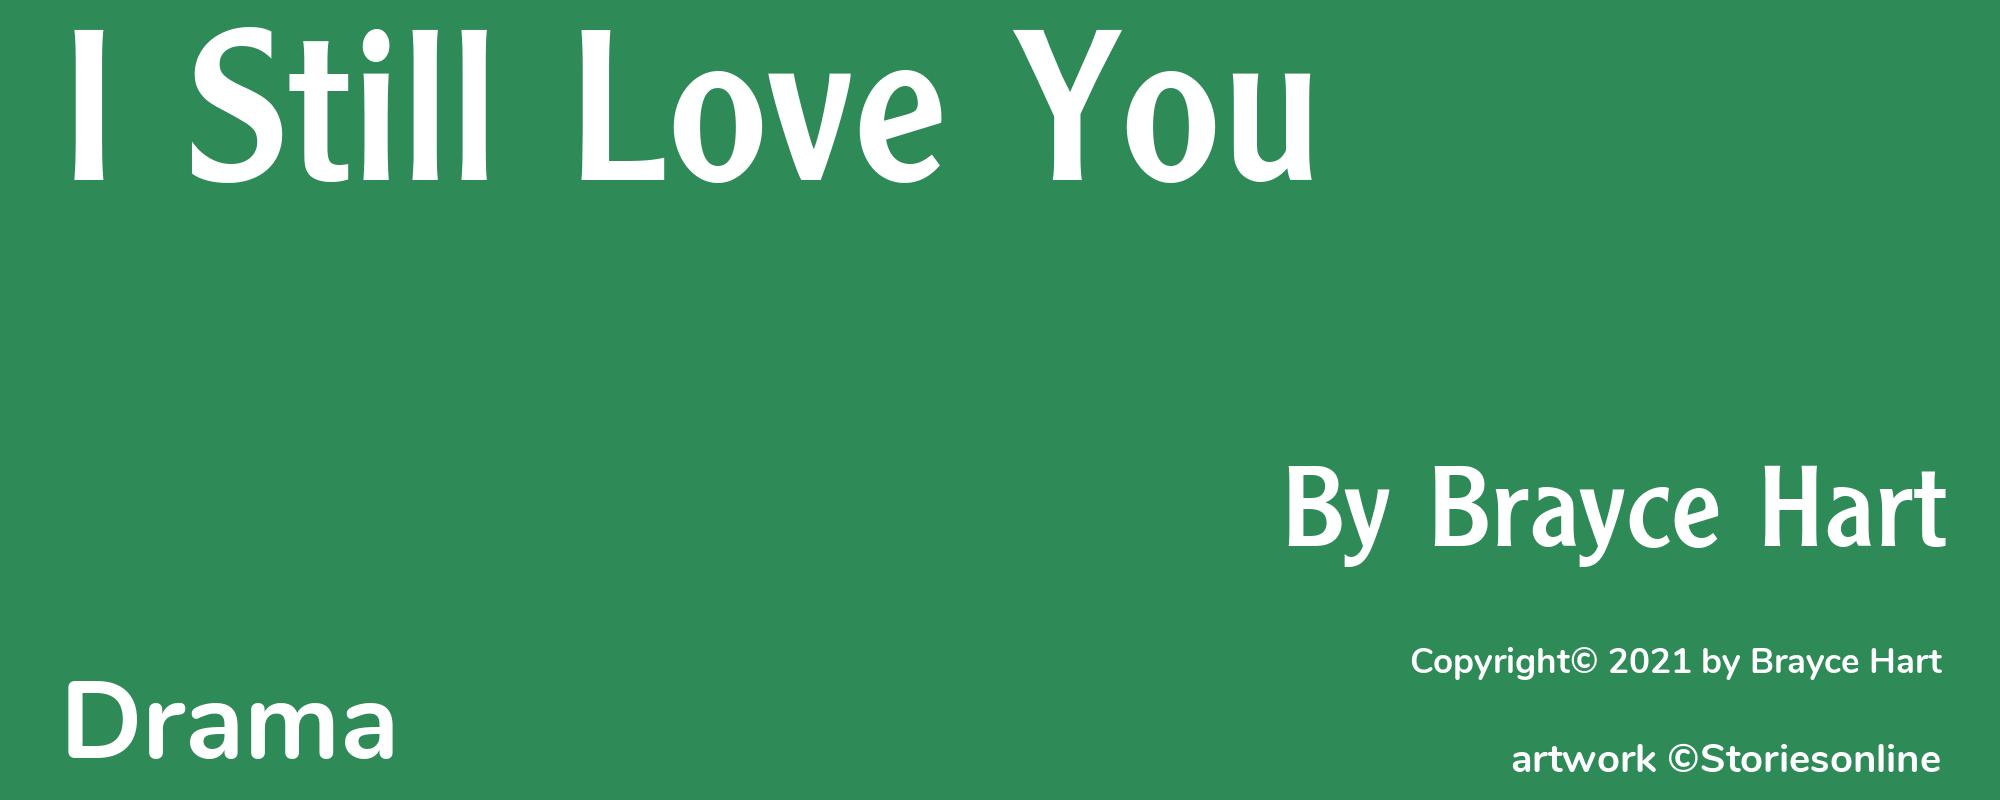 I Still Love You - Cover